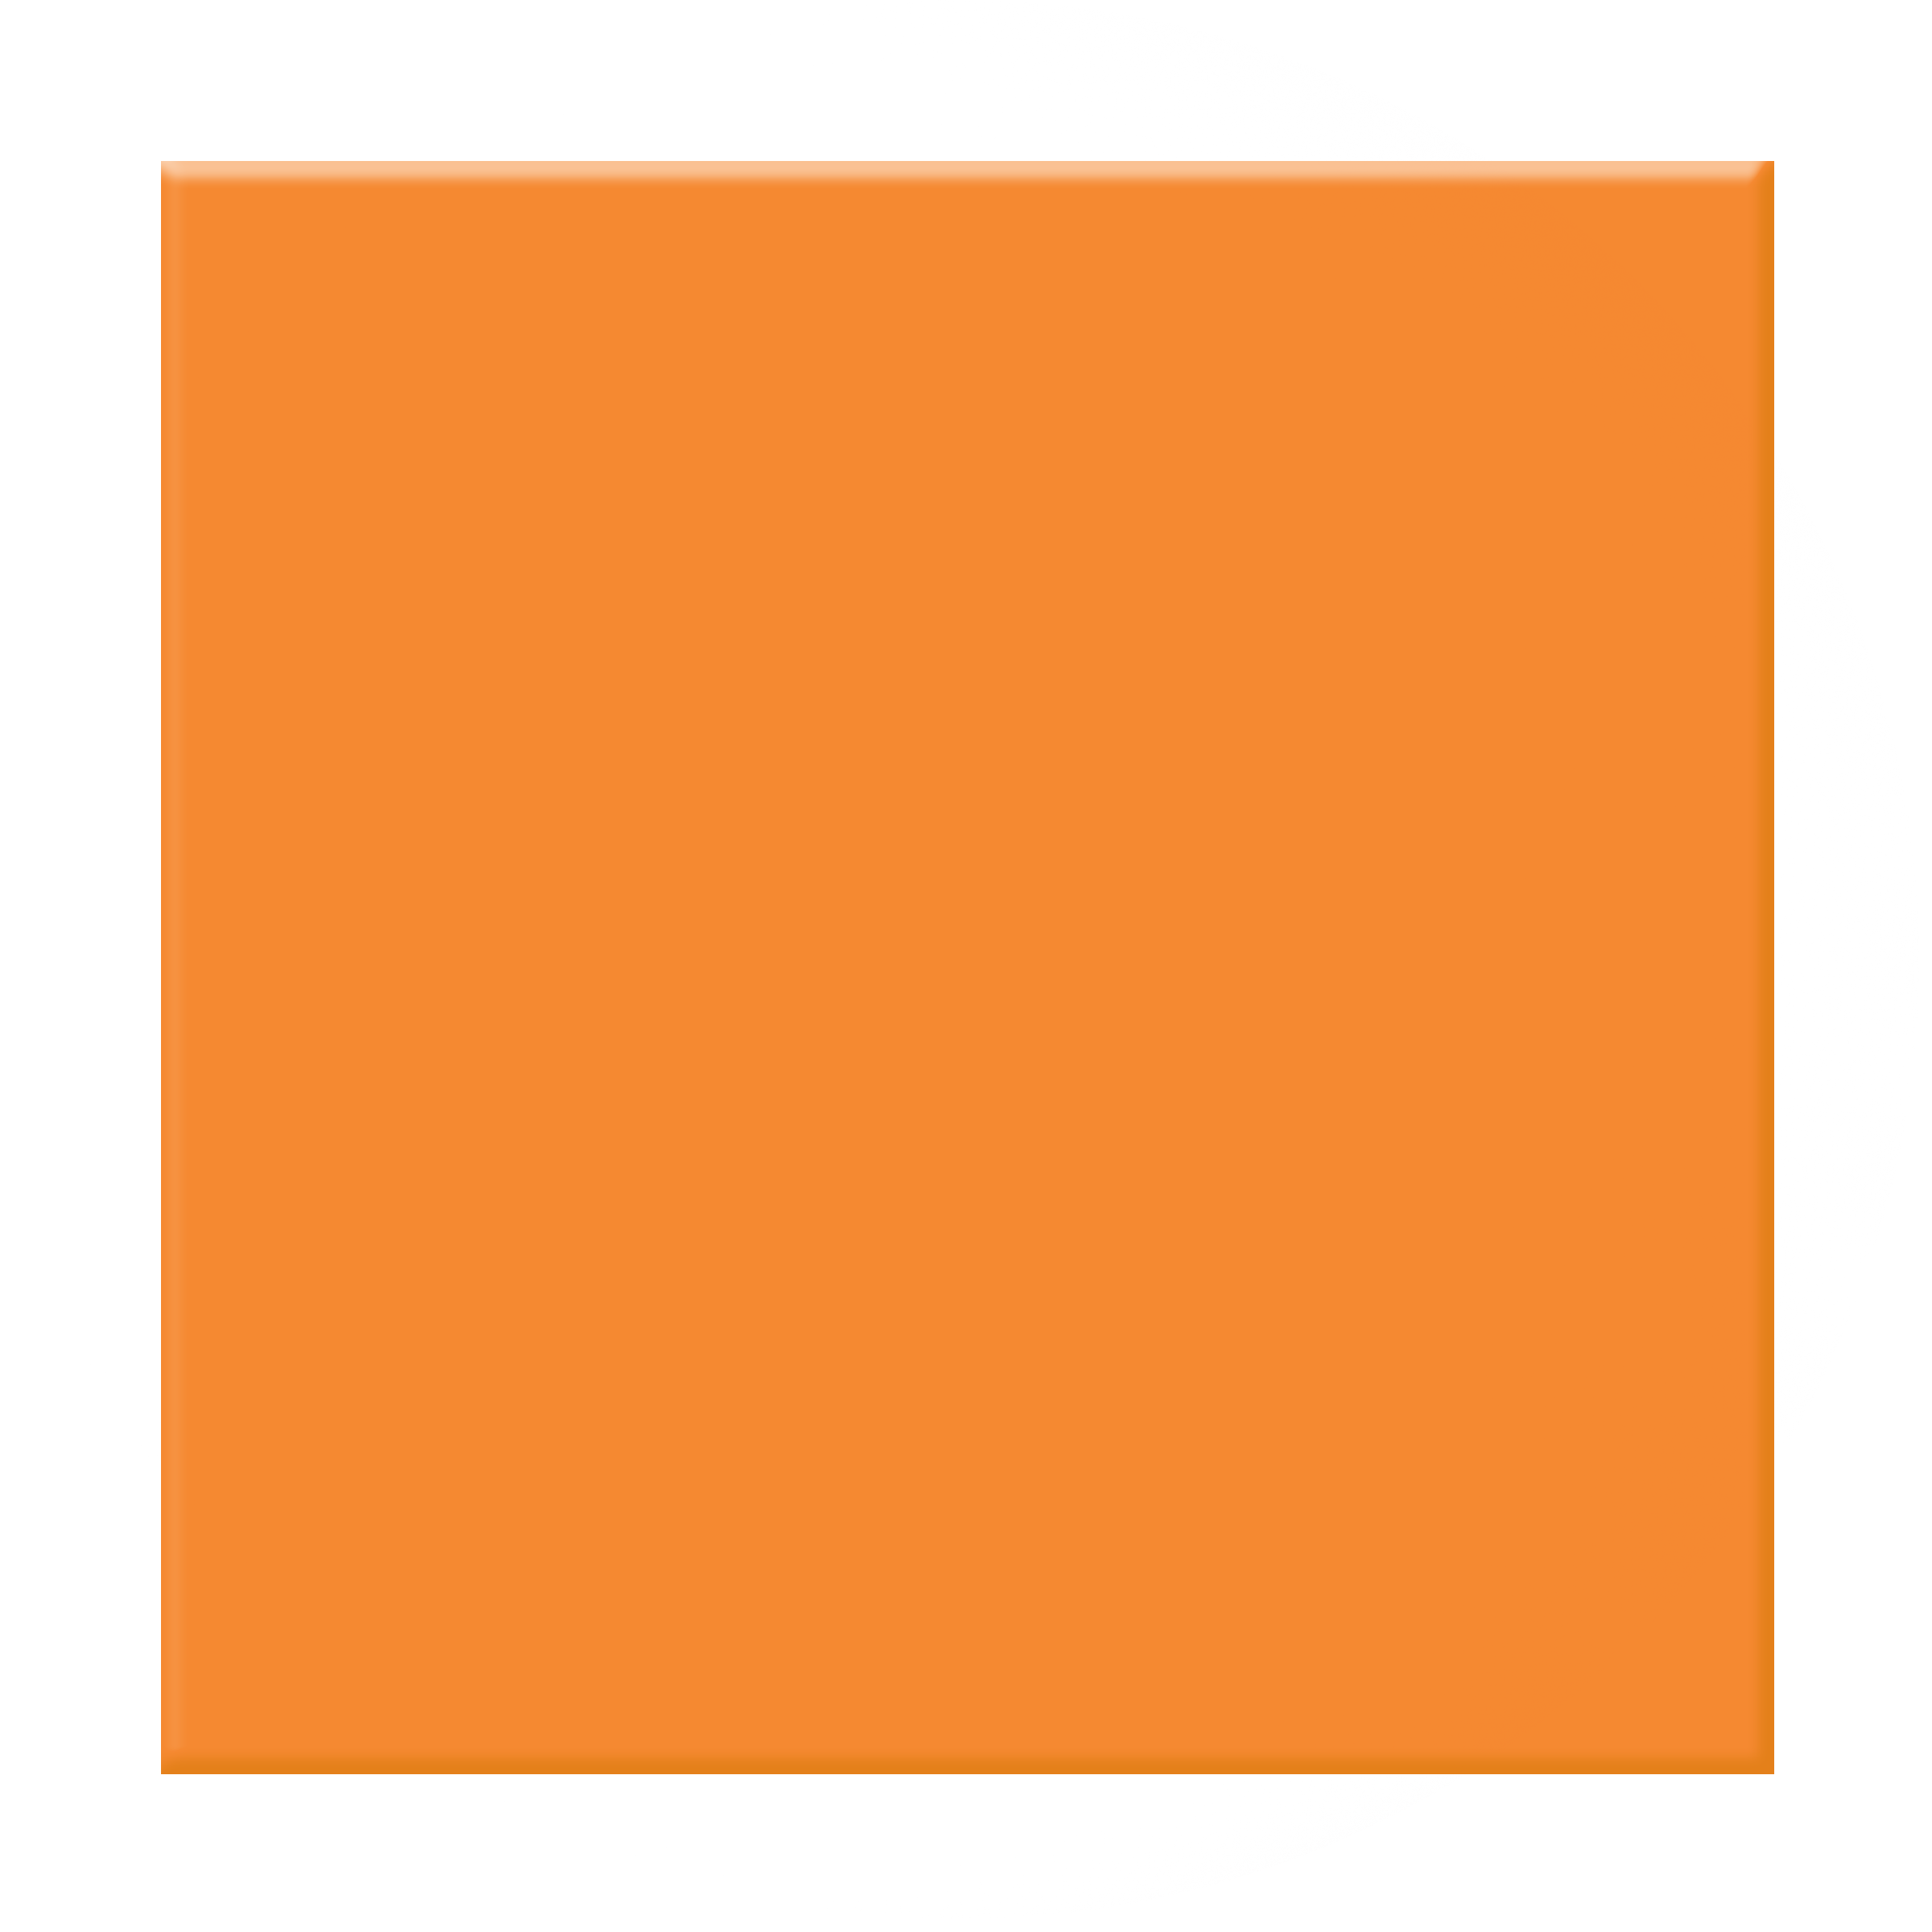 Orange Square Free Images At Clker Com Vector Clip - Clip Art (2400x2400)